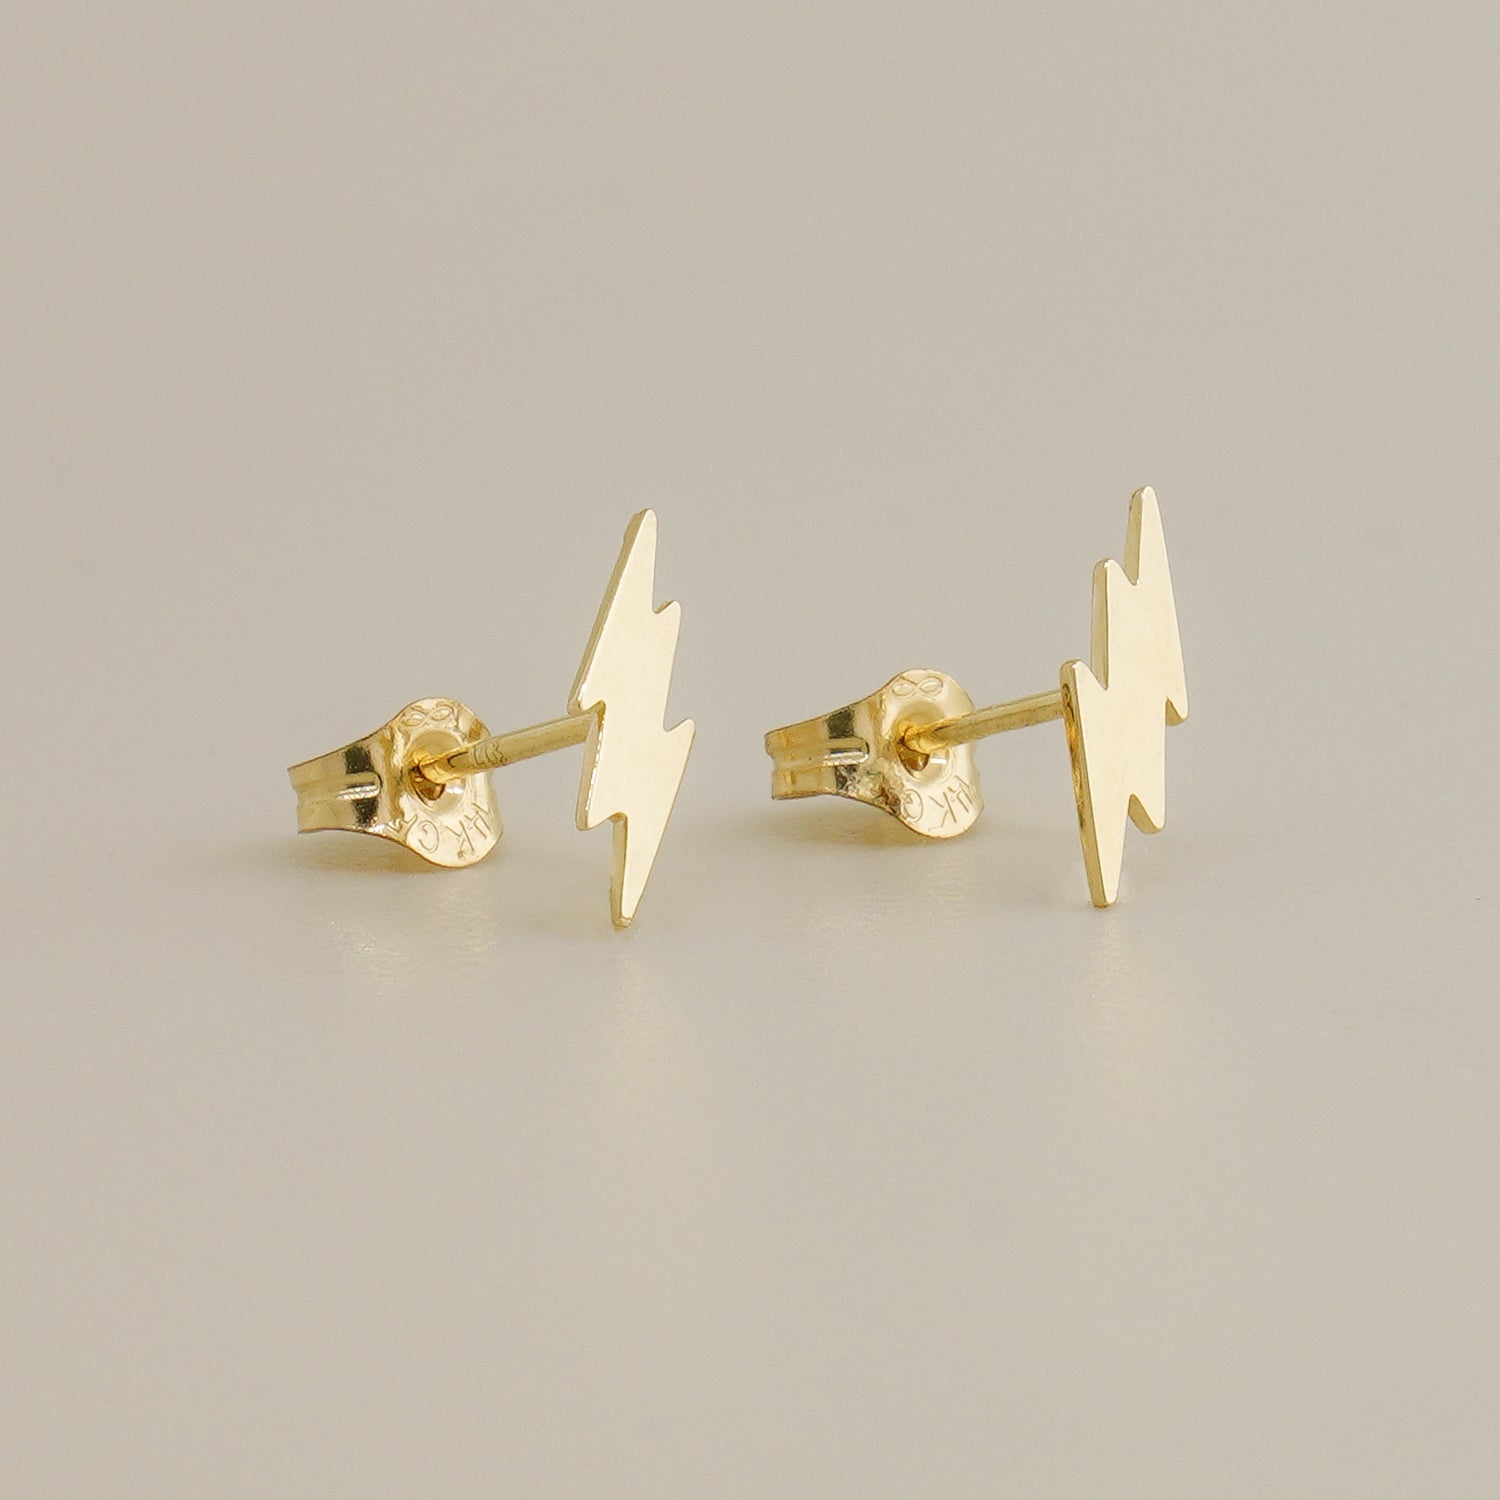 14K Solid Gold Double Lightning Stud Earrings